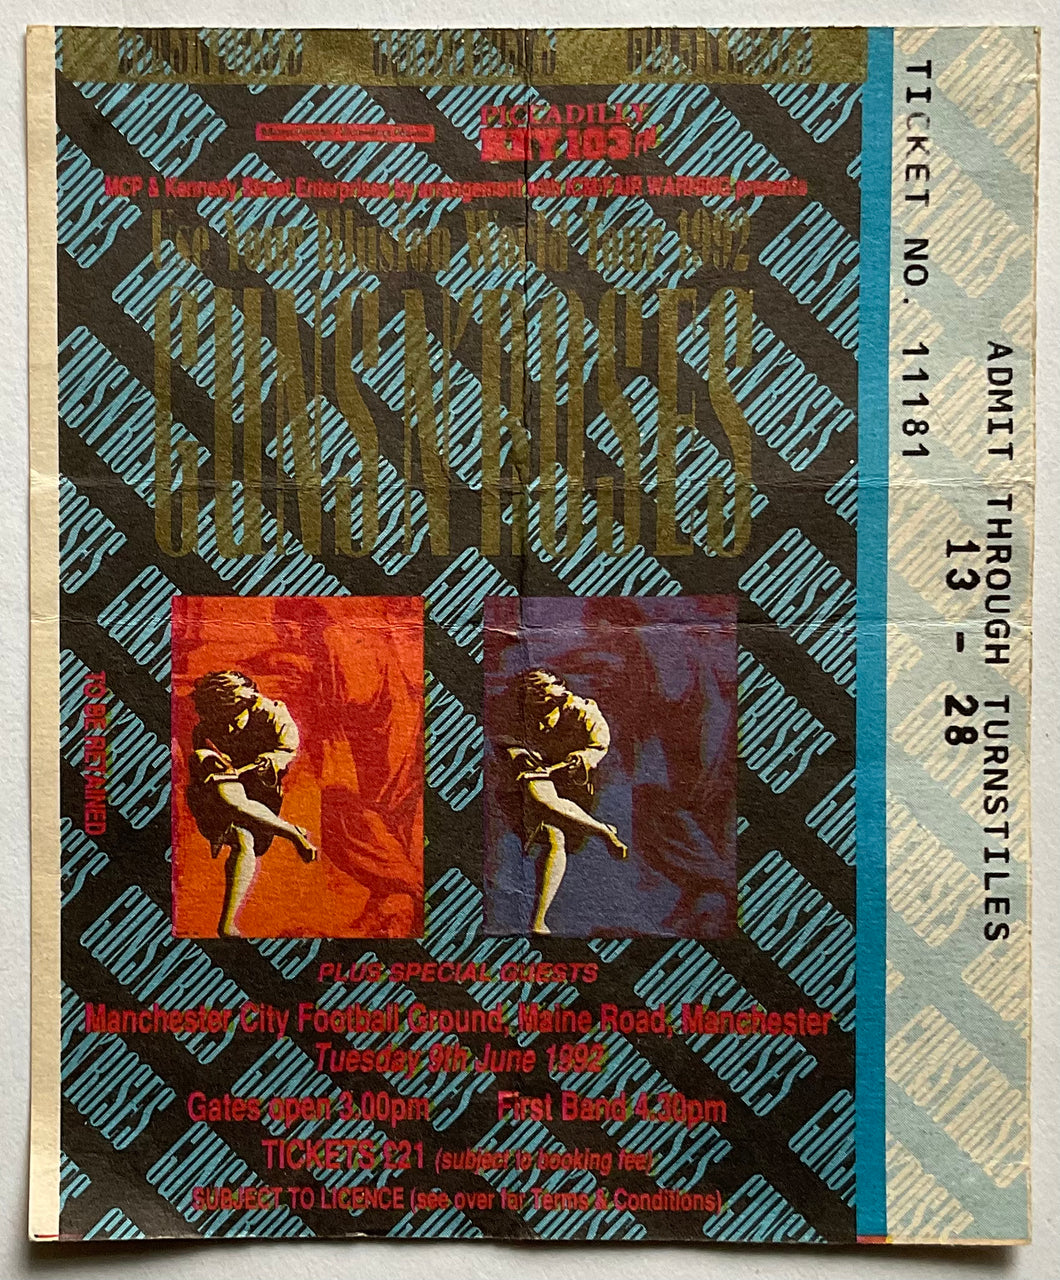 Guns N' Roses Original Used Concert Ticket Manchester City FC 9th Jun 1992